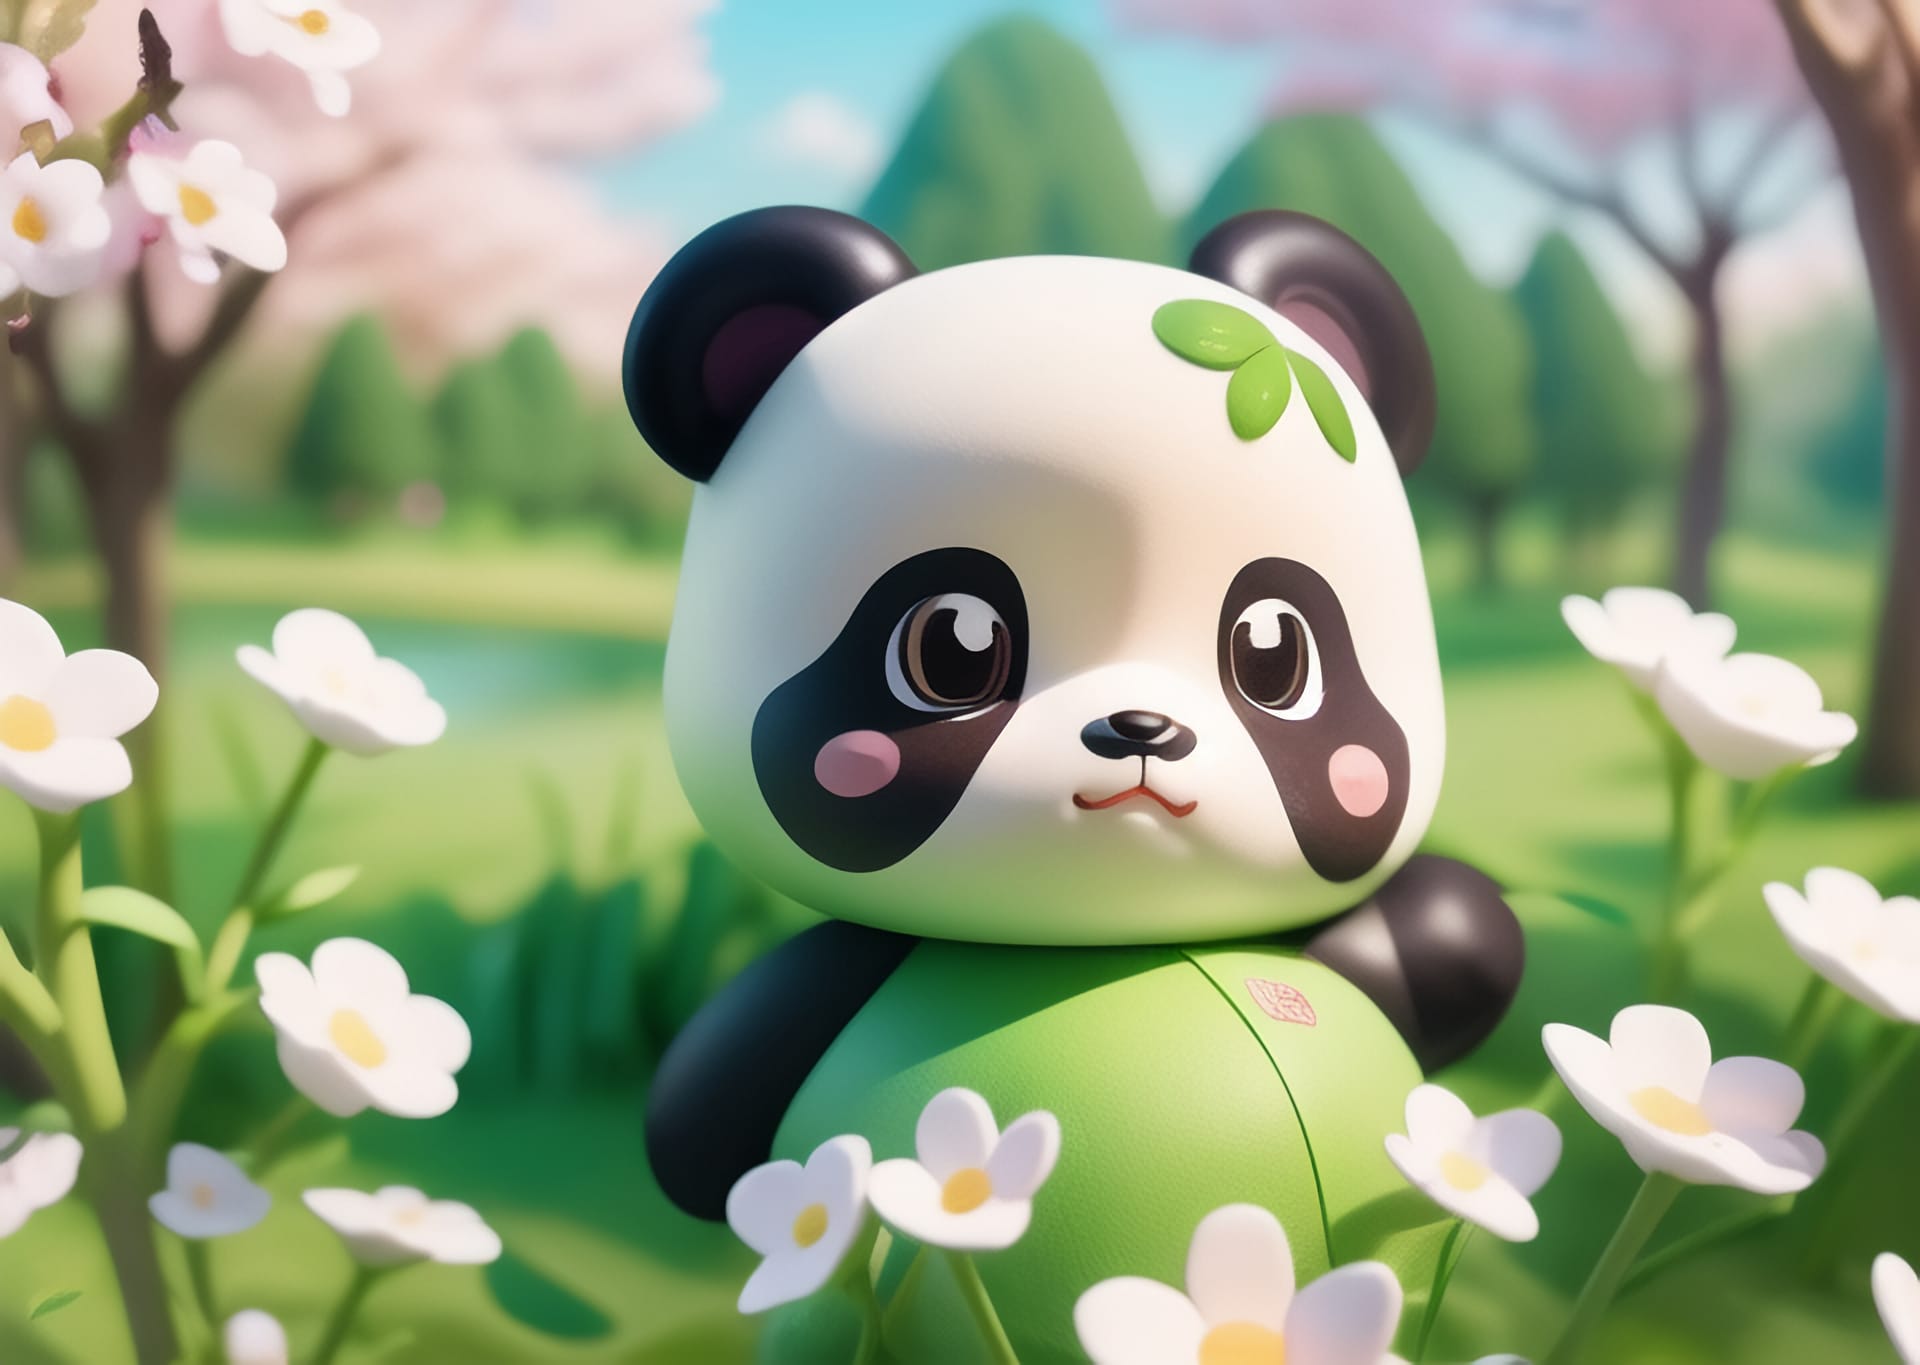 Toy panda sits field flowers